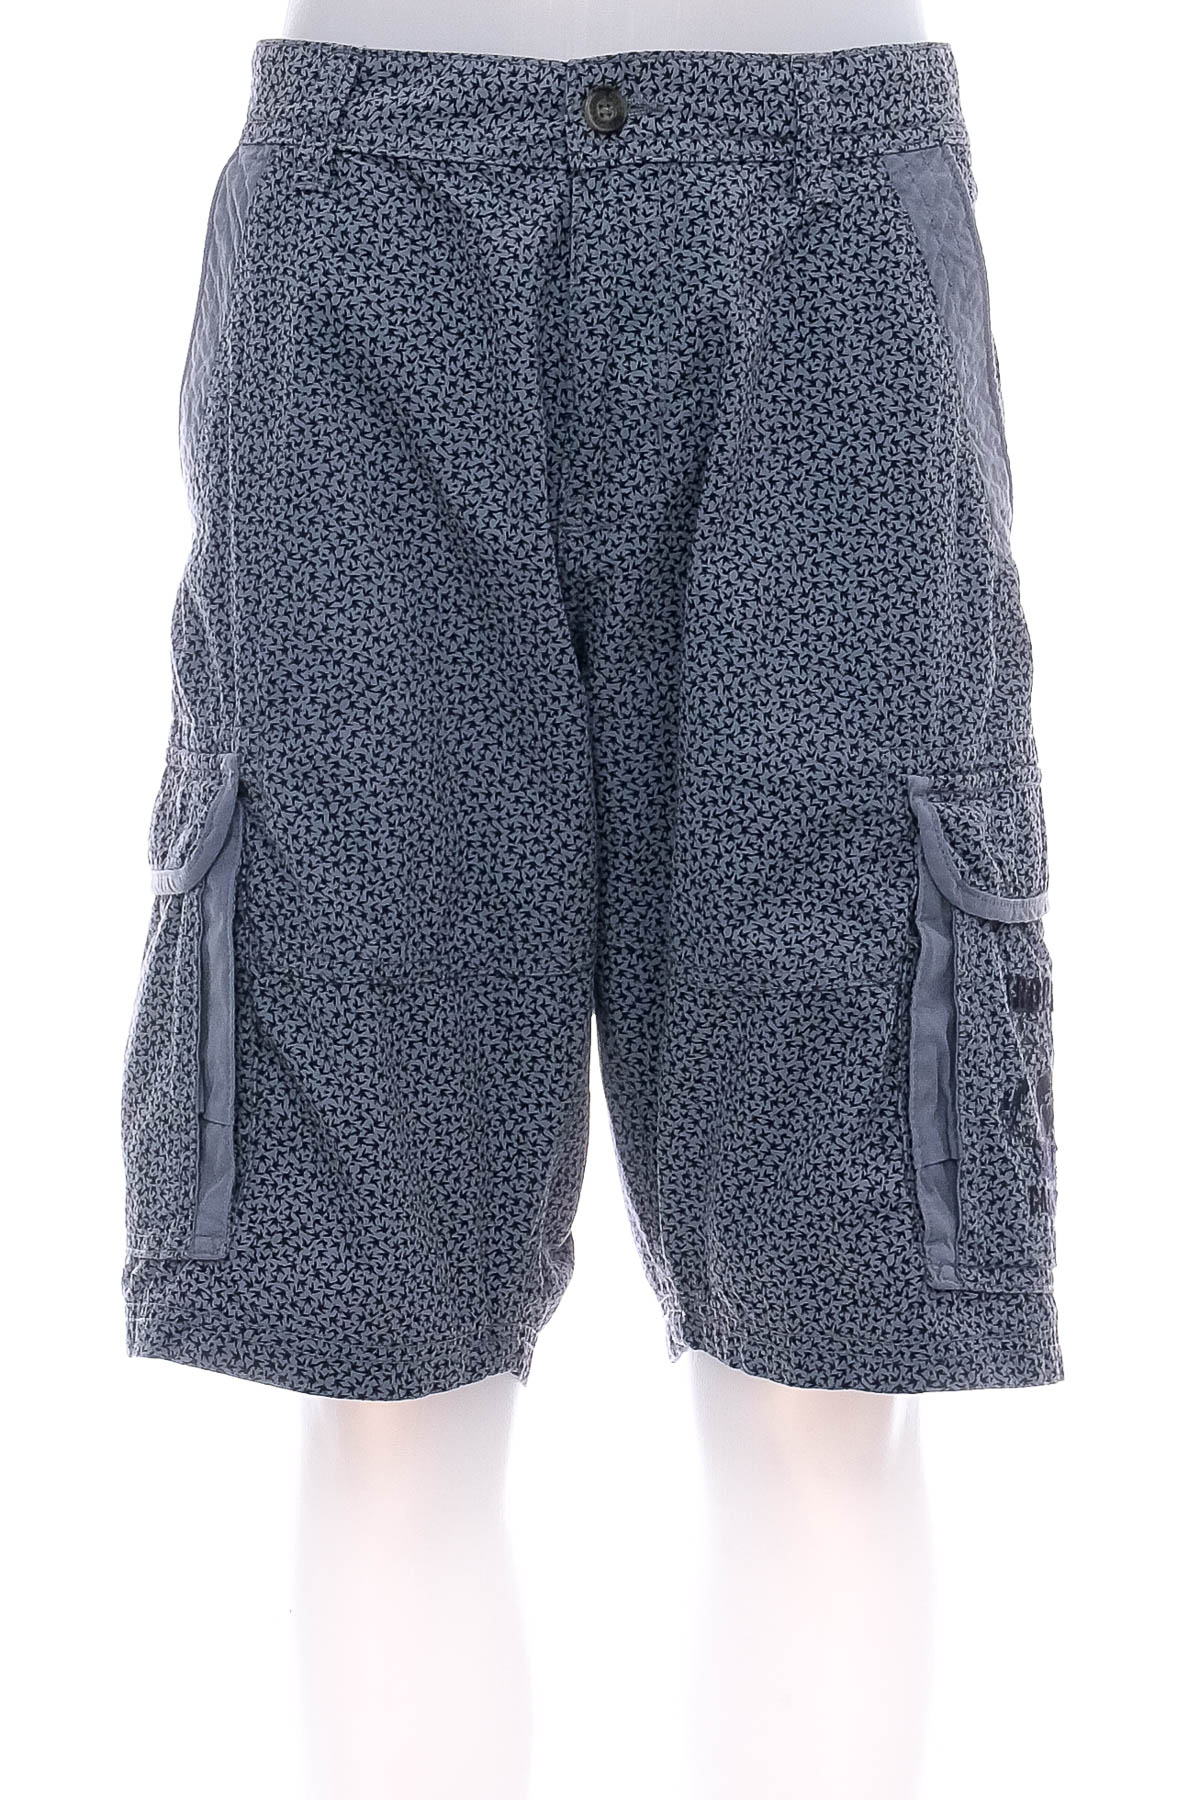 Men's shorts - Lerros - 0